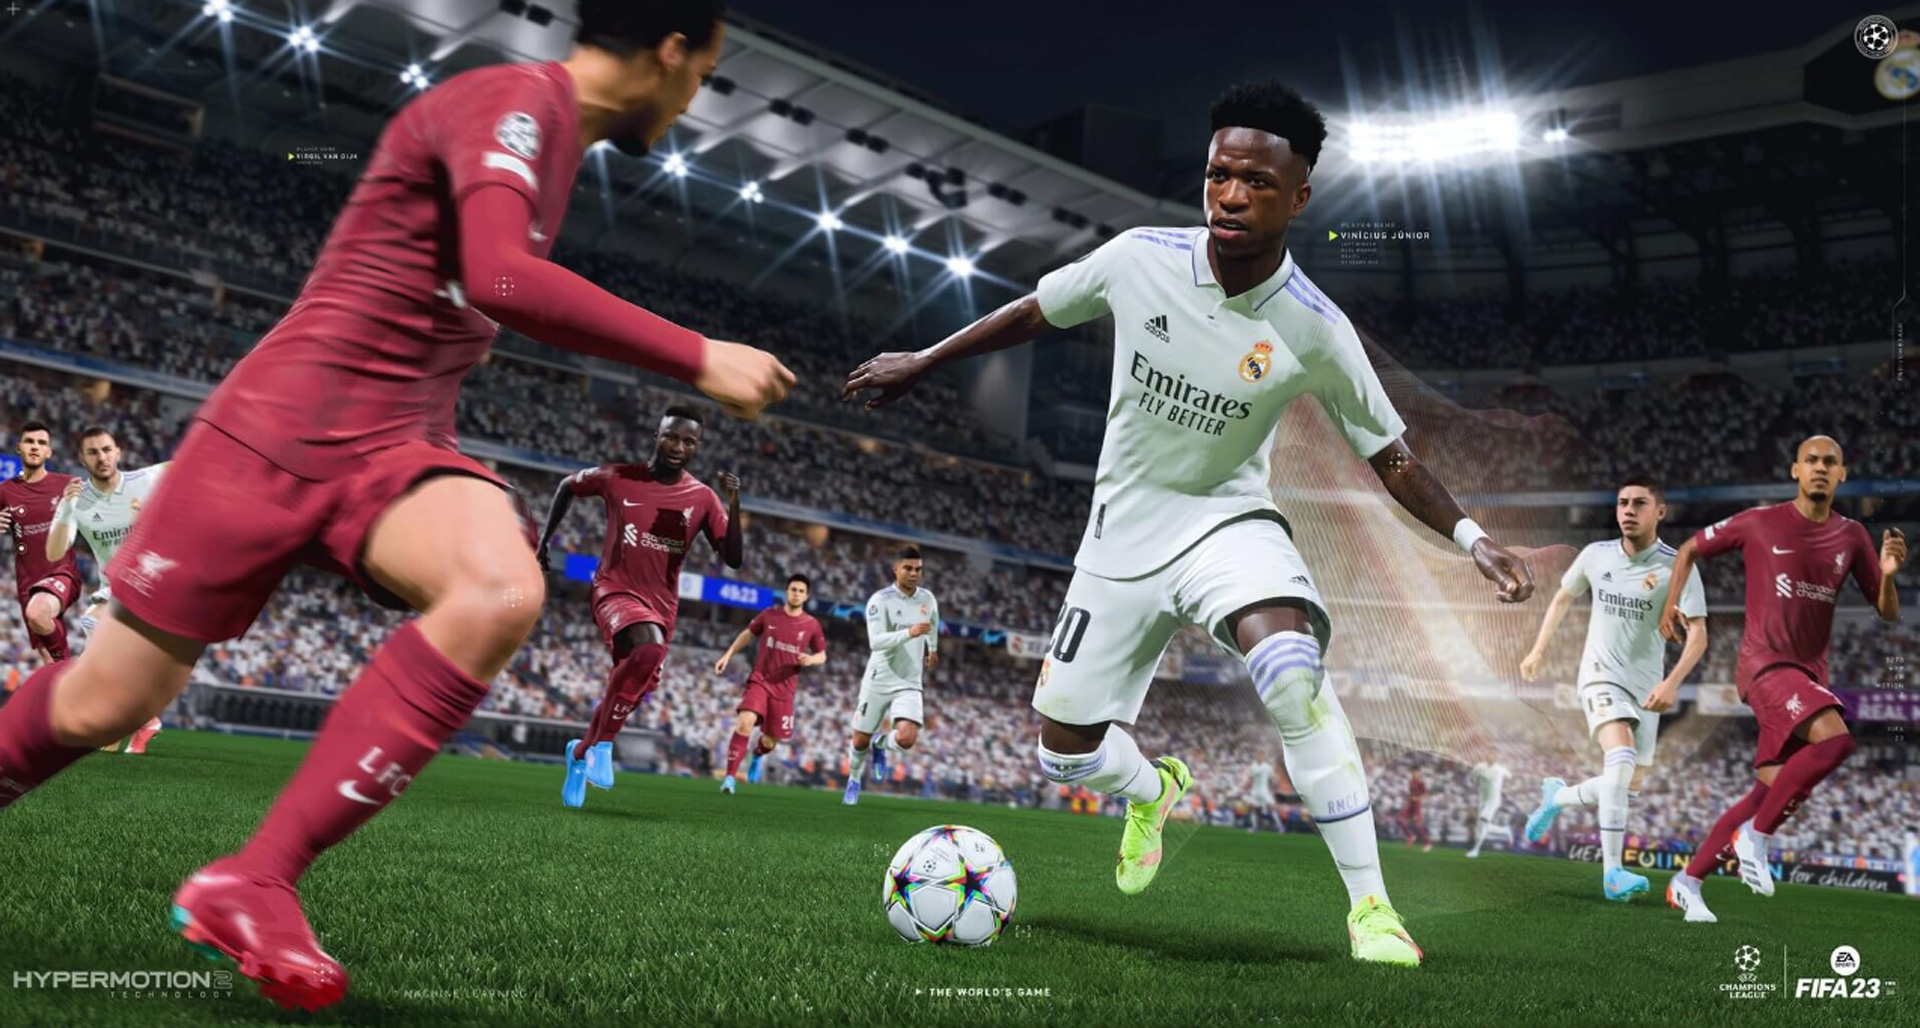 How to fix FIFA 23 anti cheat error?